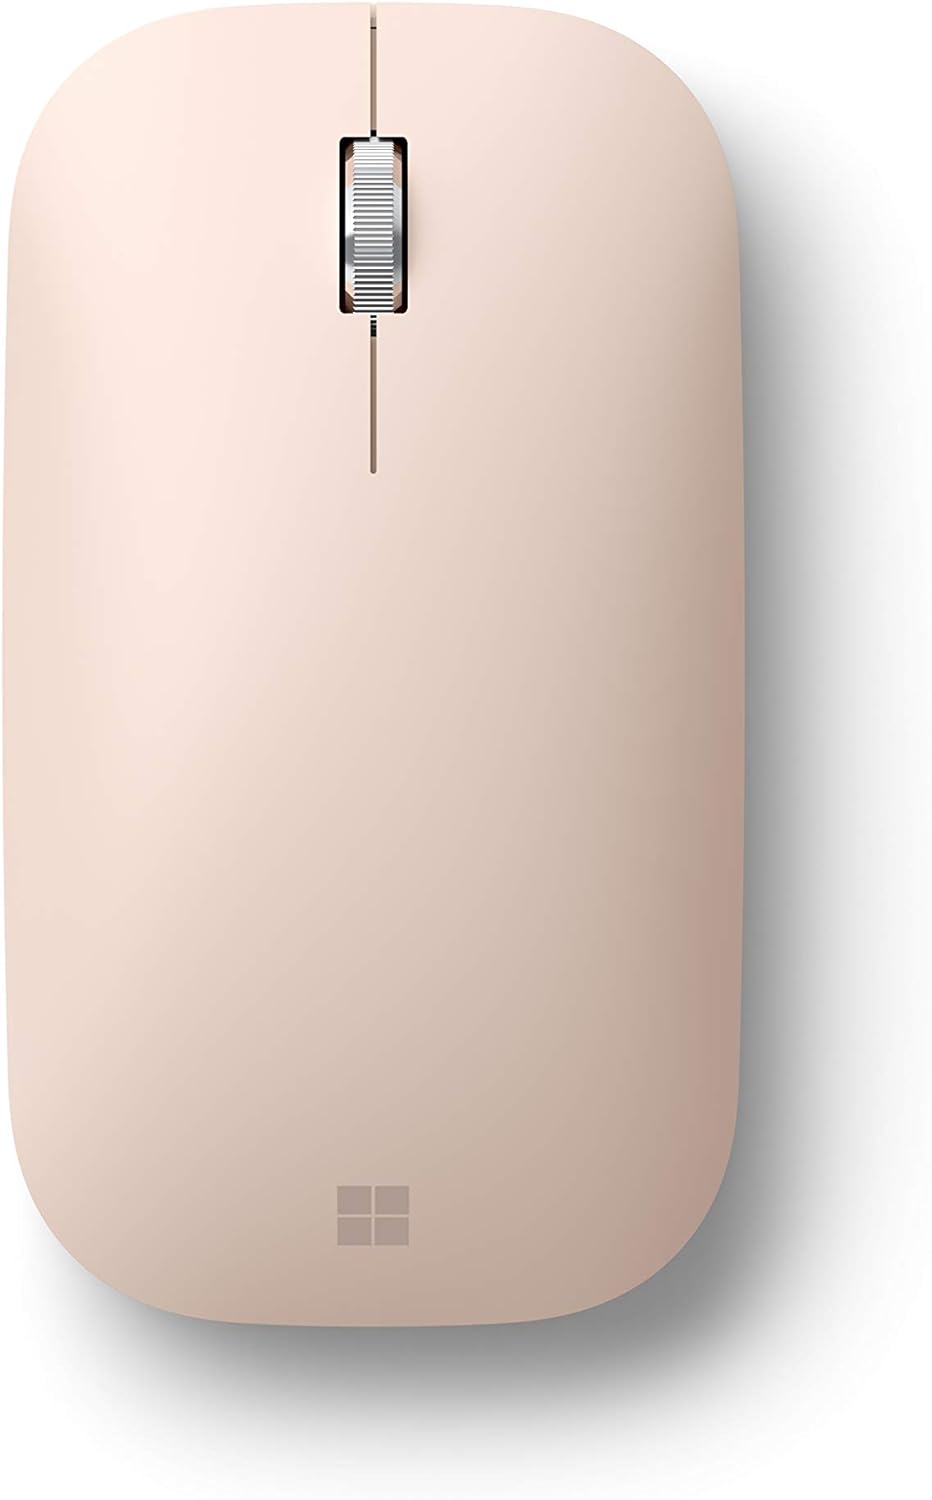 Microsoft Modern Mobile Mouse - Sandstone